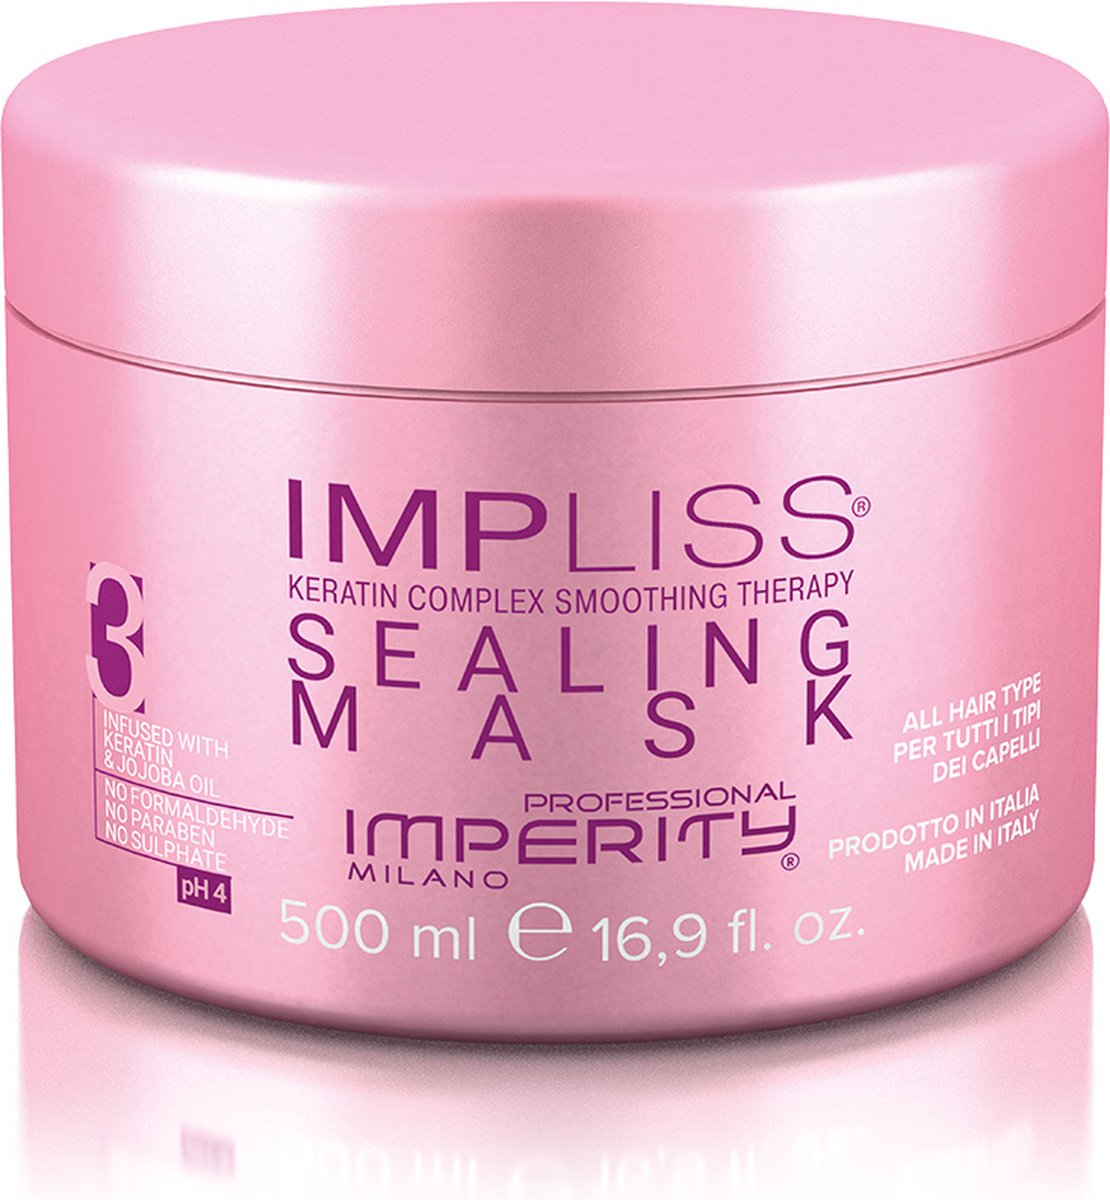 Imperity Impliss Sealing Masker - 500ml - Phase 3 - Keratine - Jojoba Olie - Organic